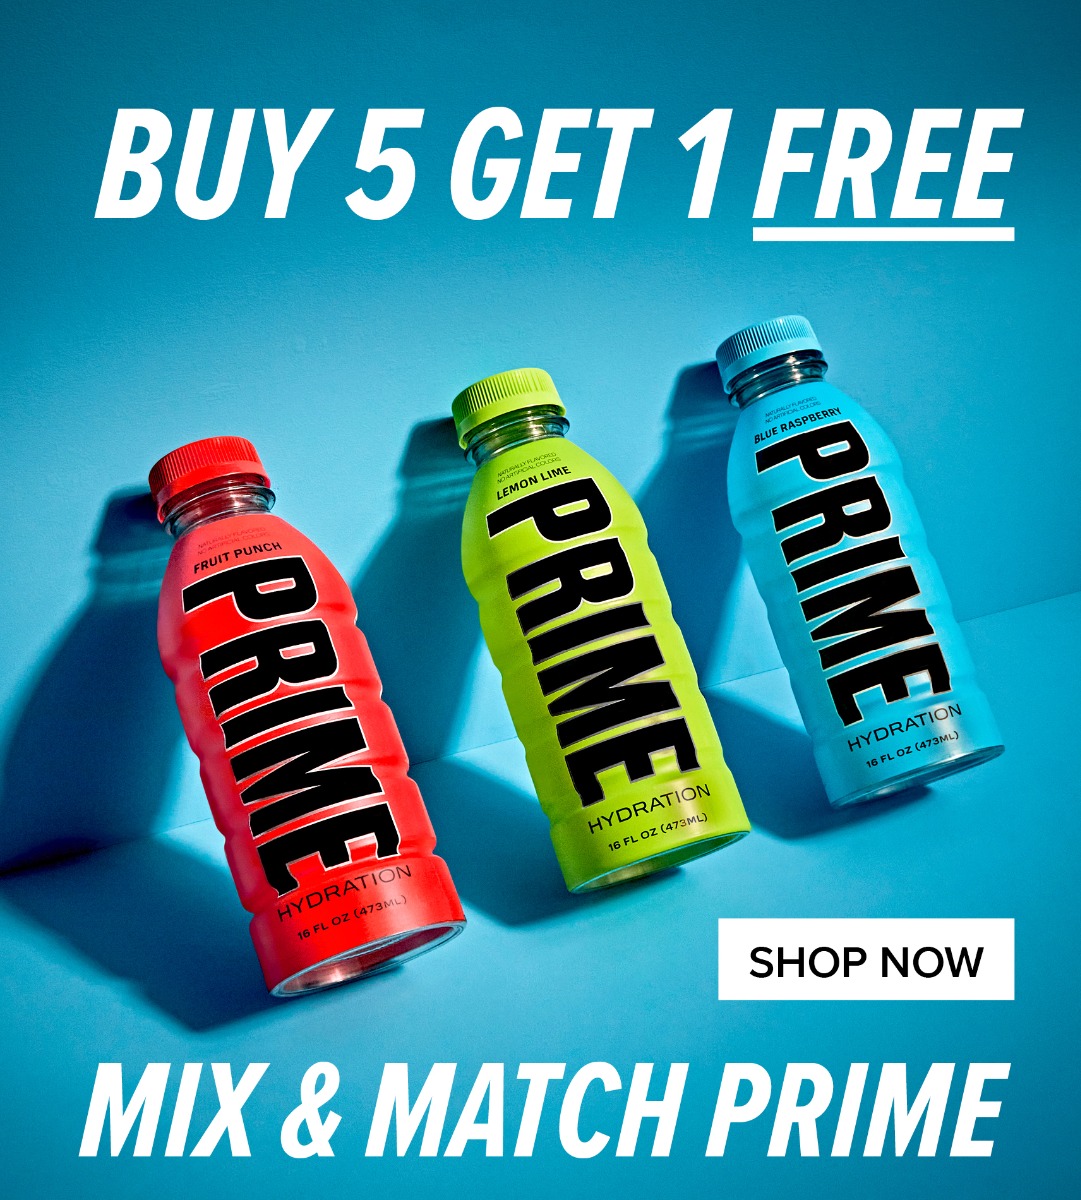 Prime Hydration Sale